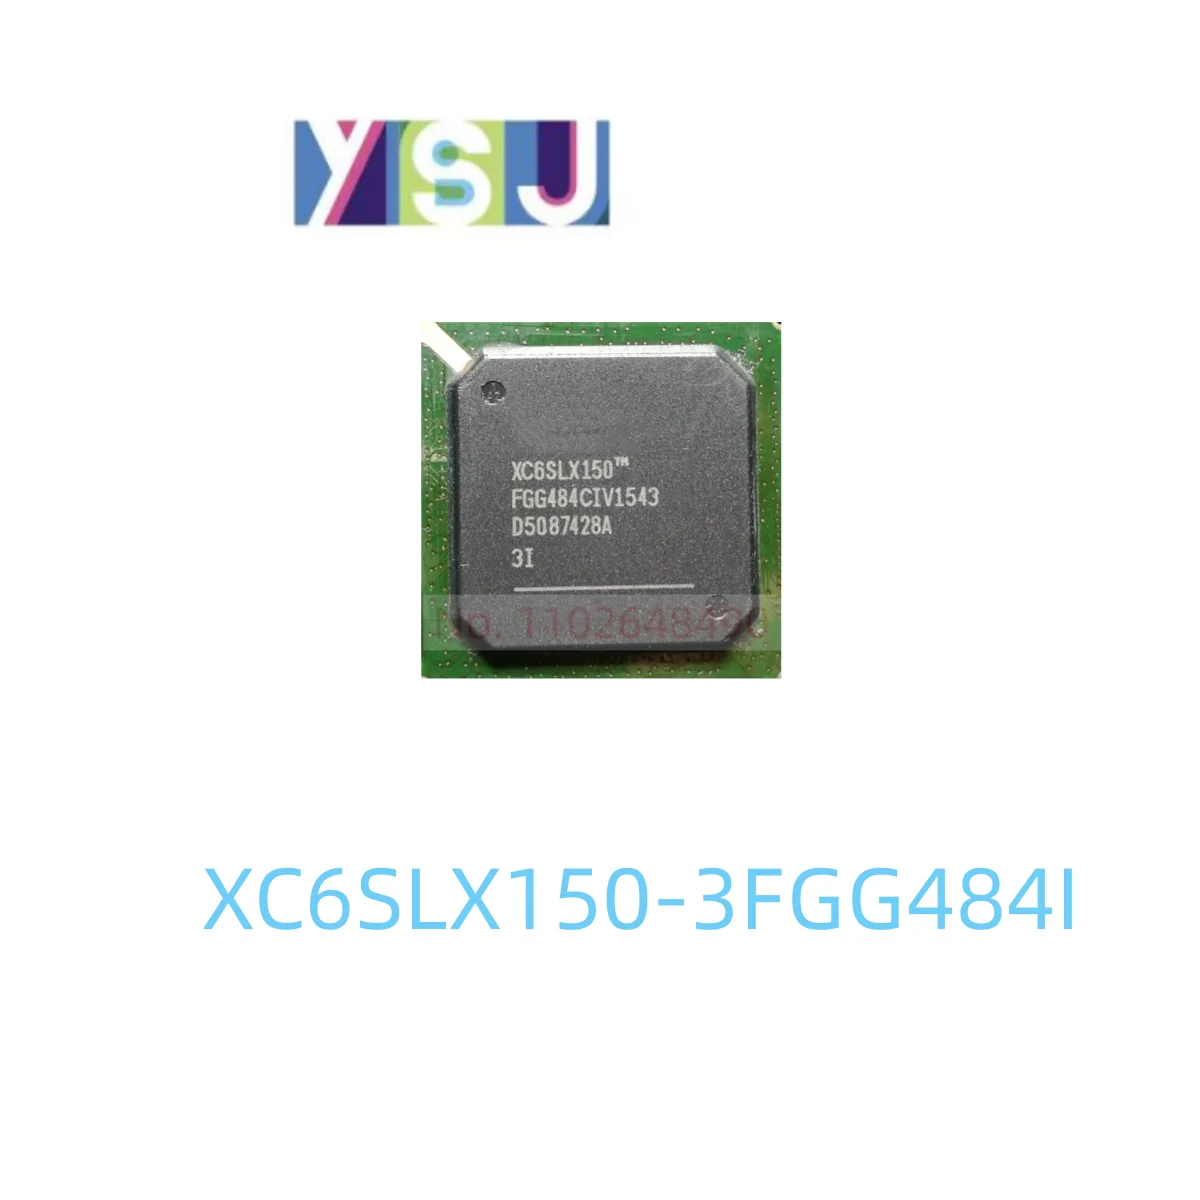 

XC6SLX150-3FGG484I IC CPLD FPGA Original Field Programmable Gate Array